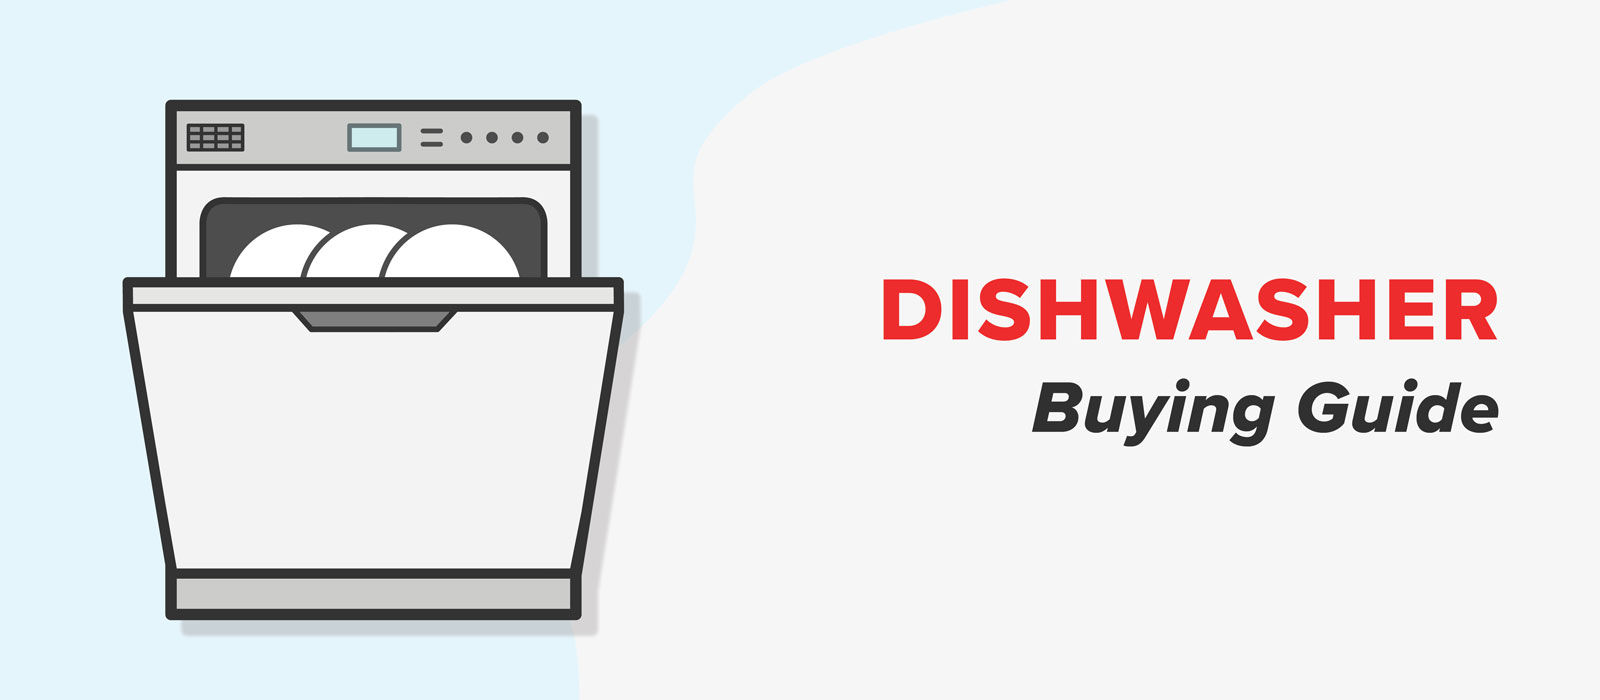 Grand Dishwasher Buying Guide